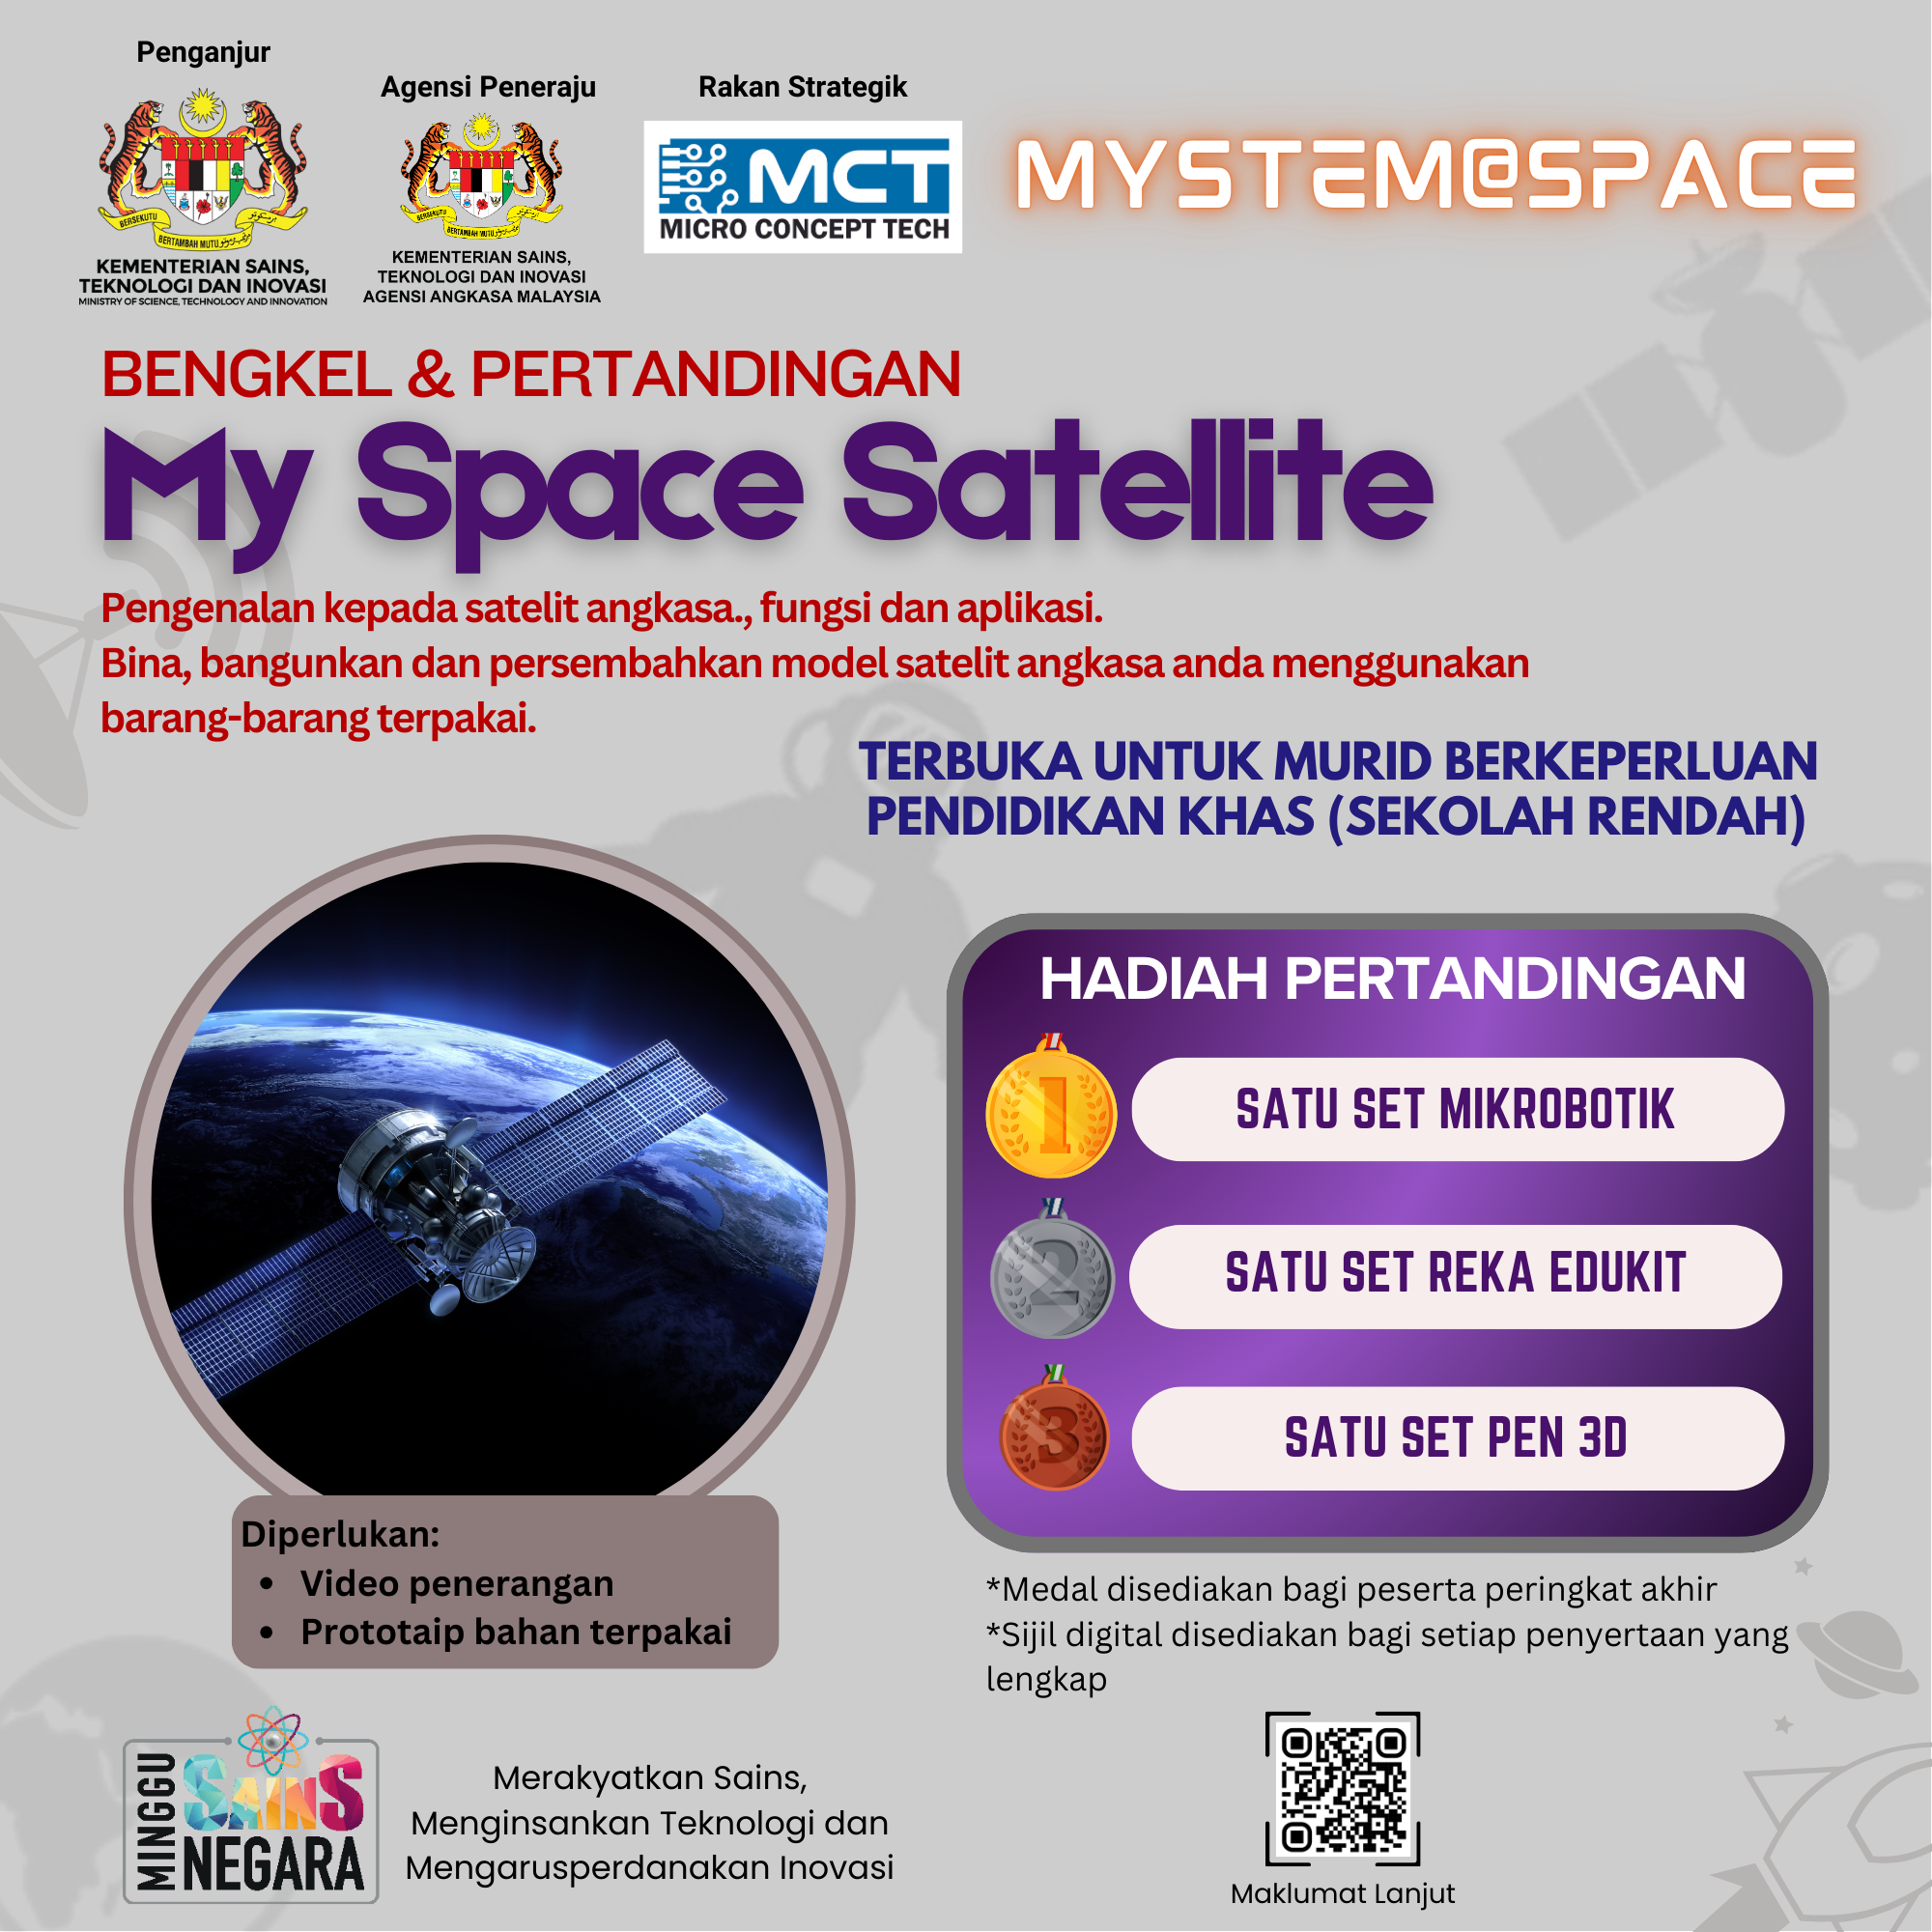 MySTEM@SPACE_MYSS